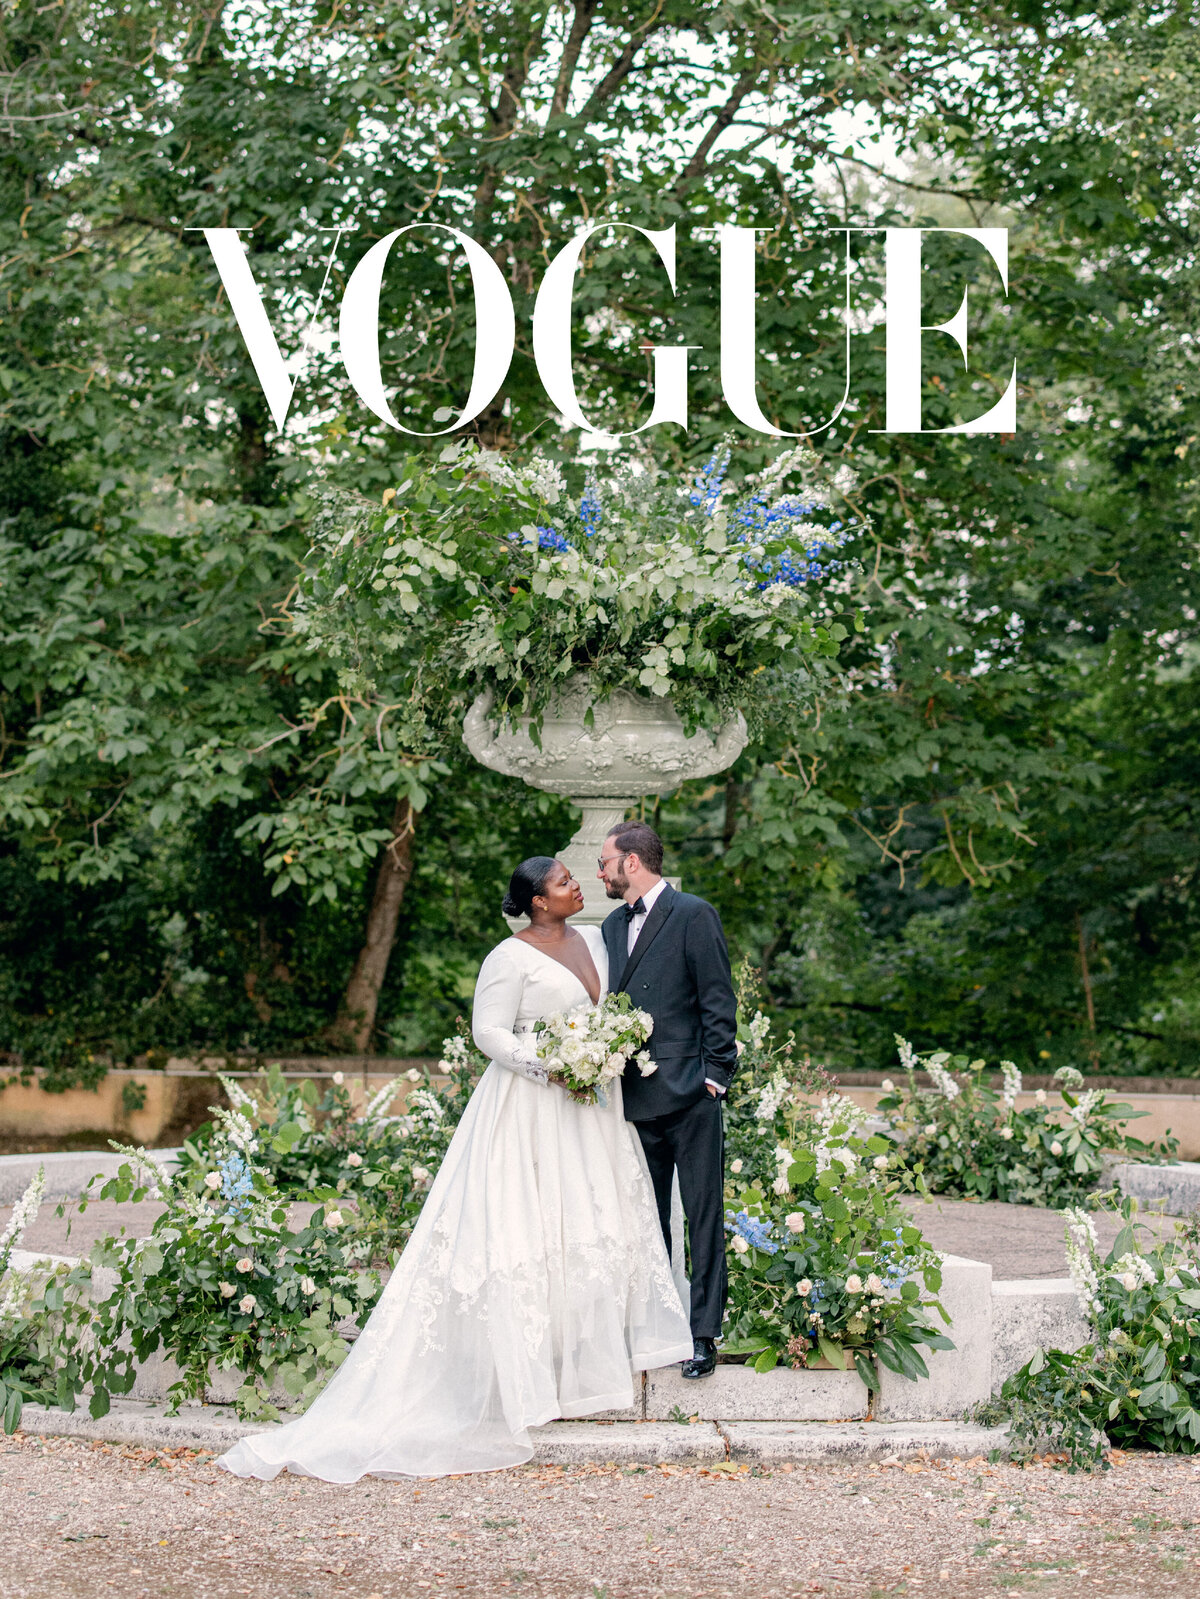 real wedding featured in Vogue - bride Makeda